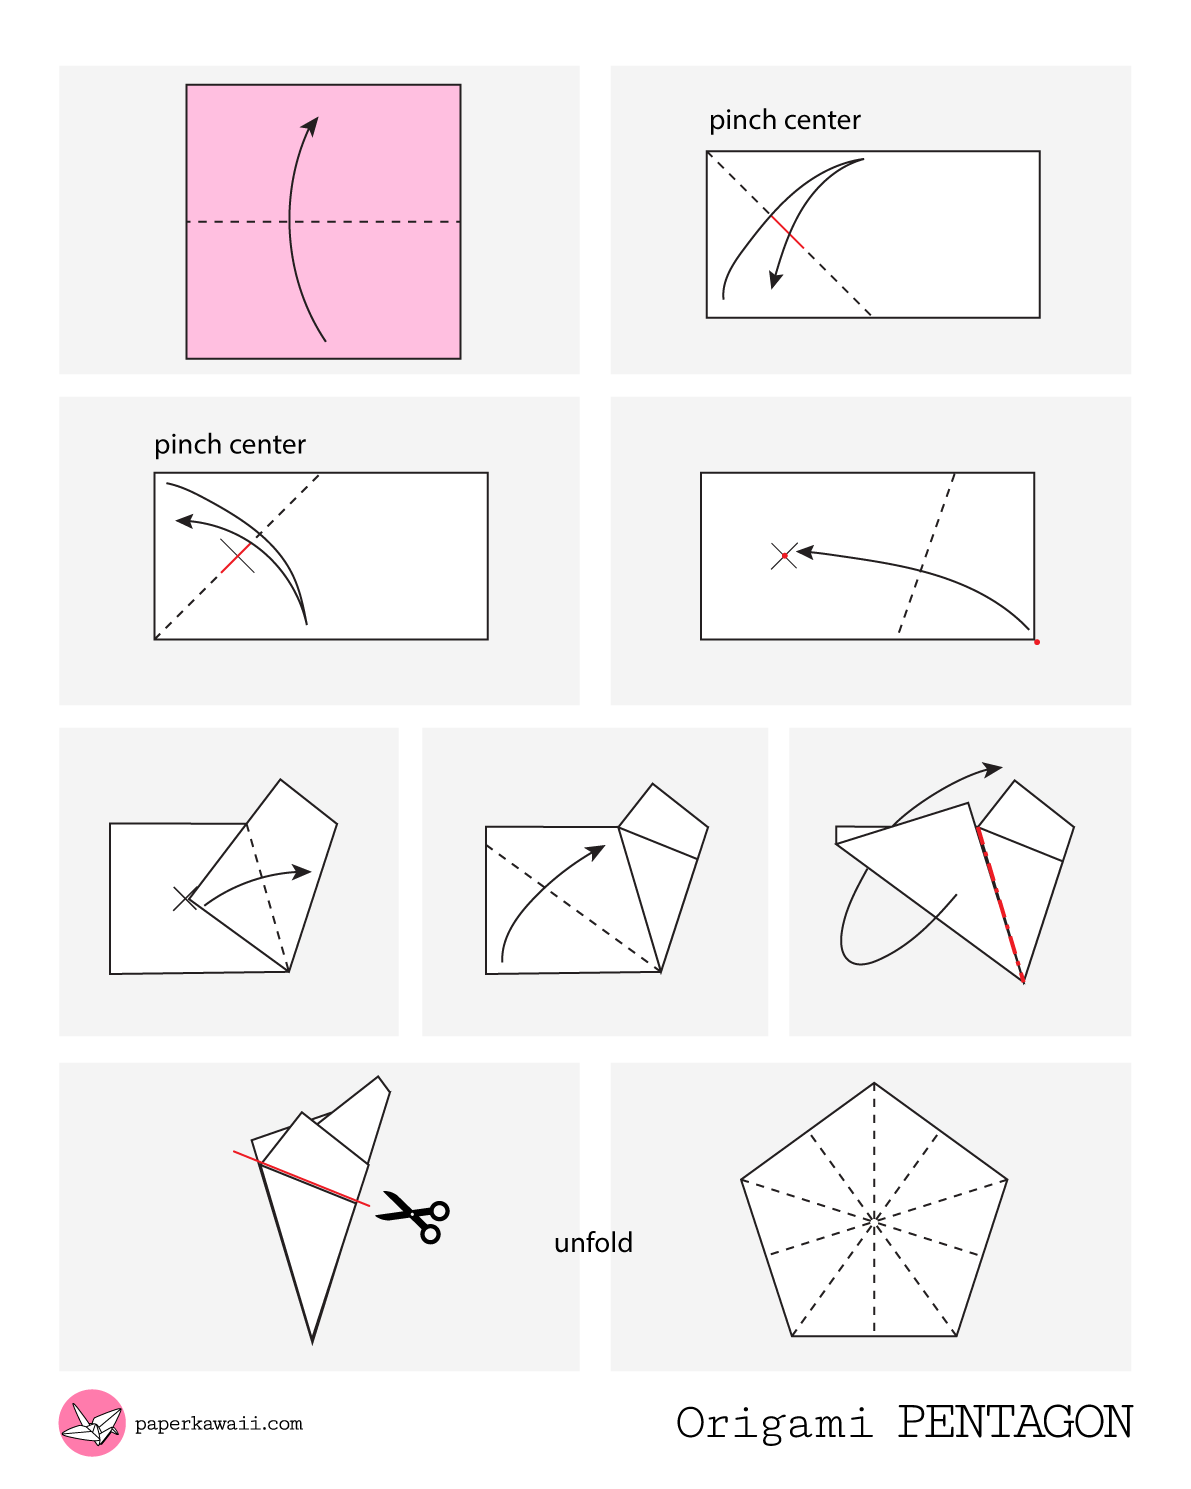 How to make an origami Pentagon - Diagram